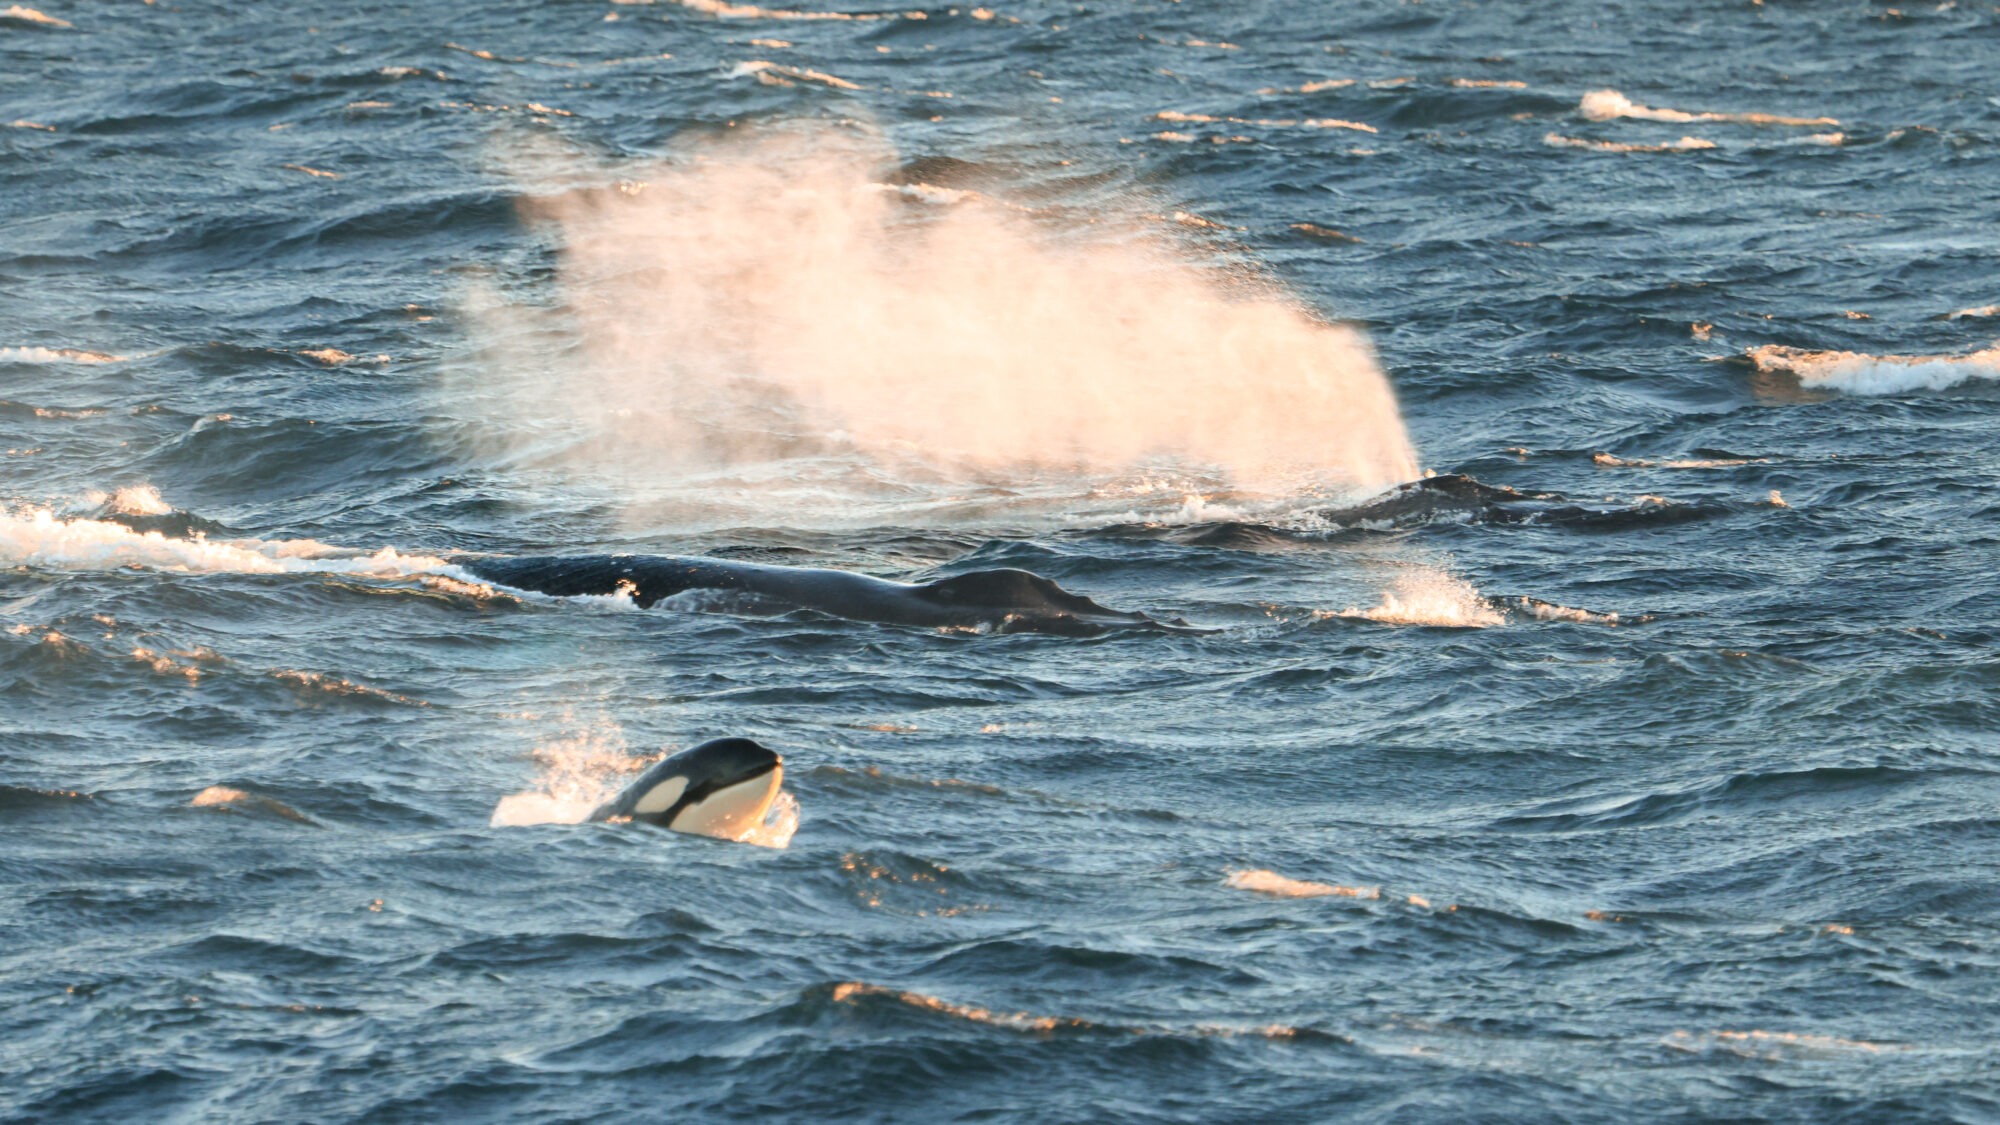 Orca and humpbacks